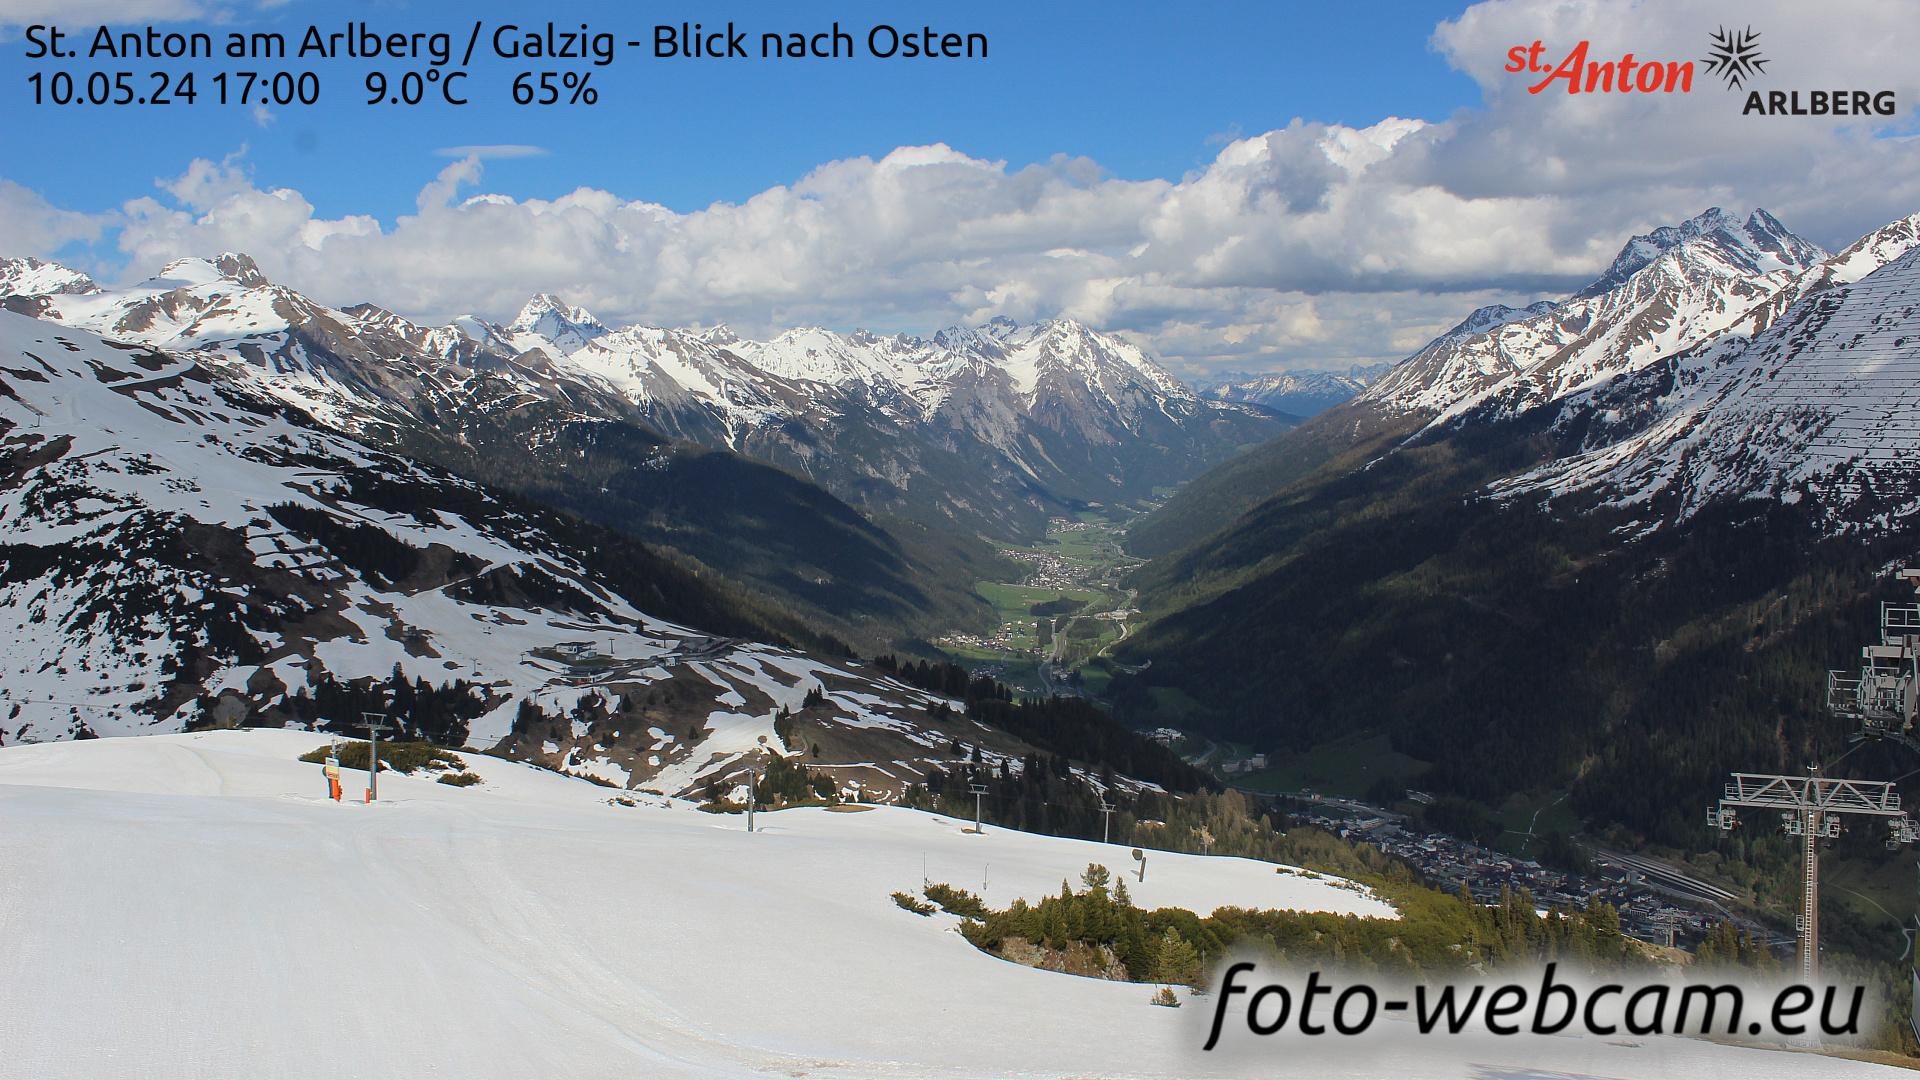 St. Anton am Arlberg So. 17:01